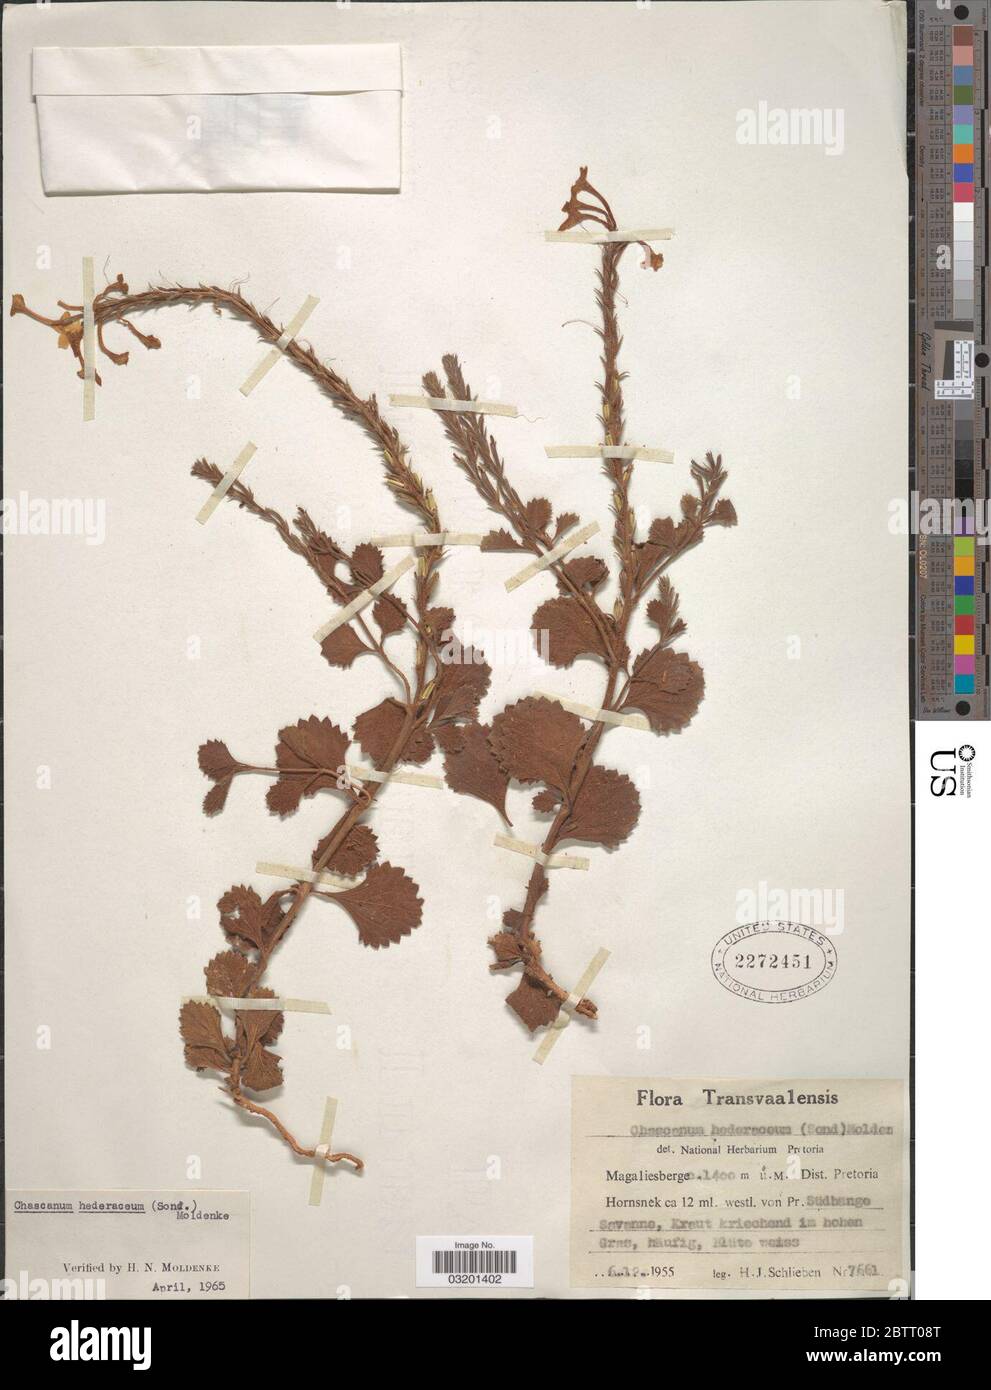 Chascanum hederaceum Sonder Moldenke. Stock Photo